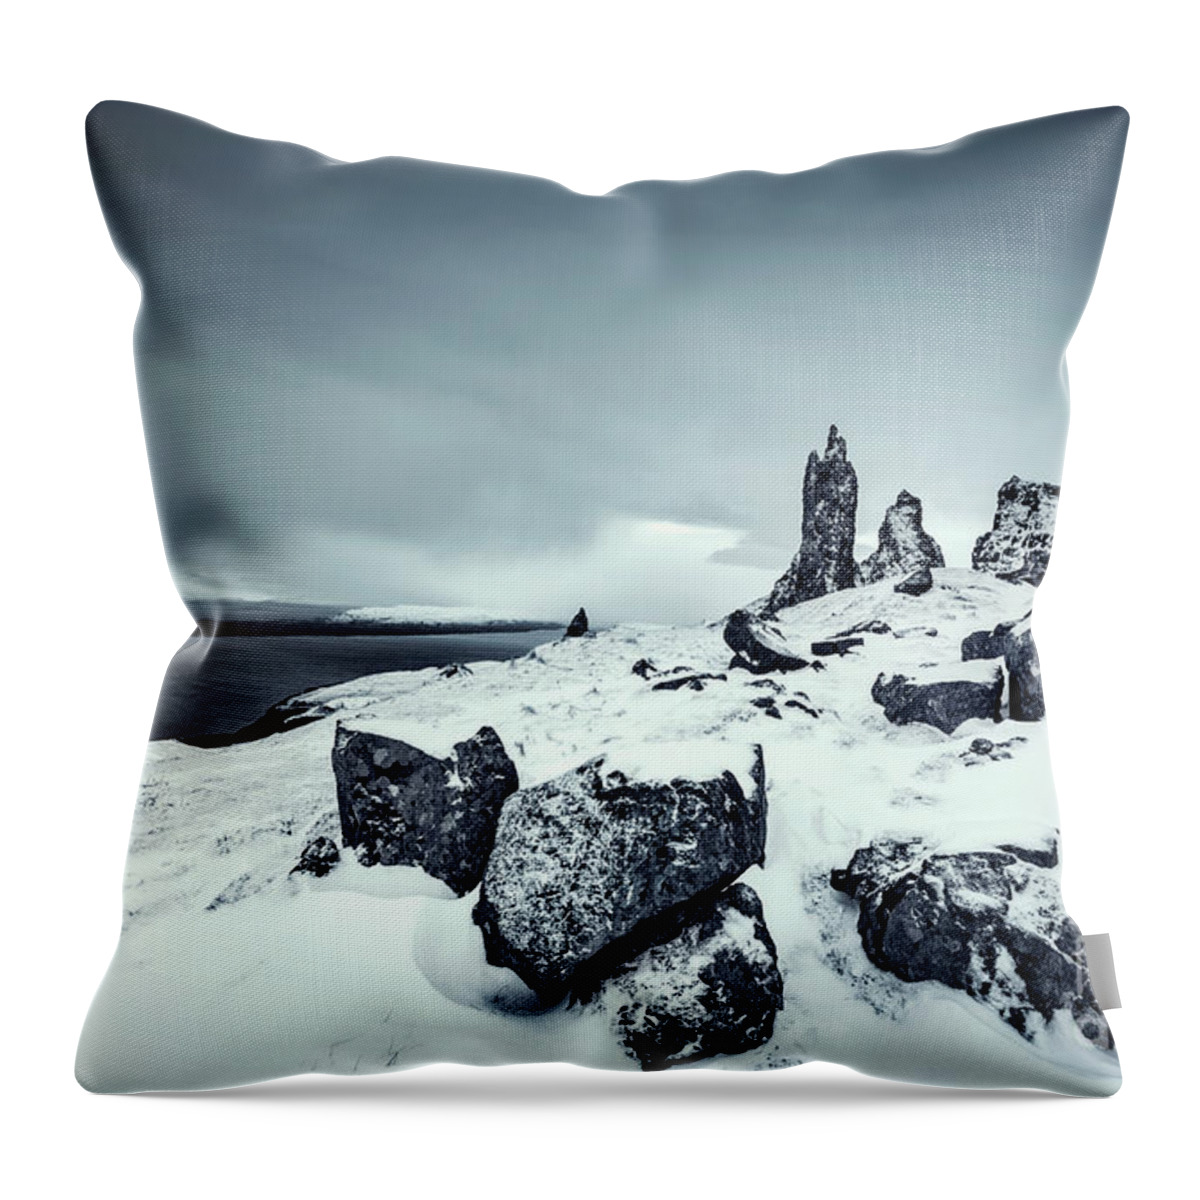 Kremsdorf Throw Pillow featuring the photograph Silver Skye by Evelina Kremsdorf